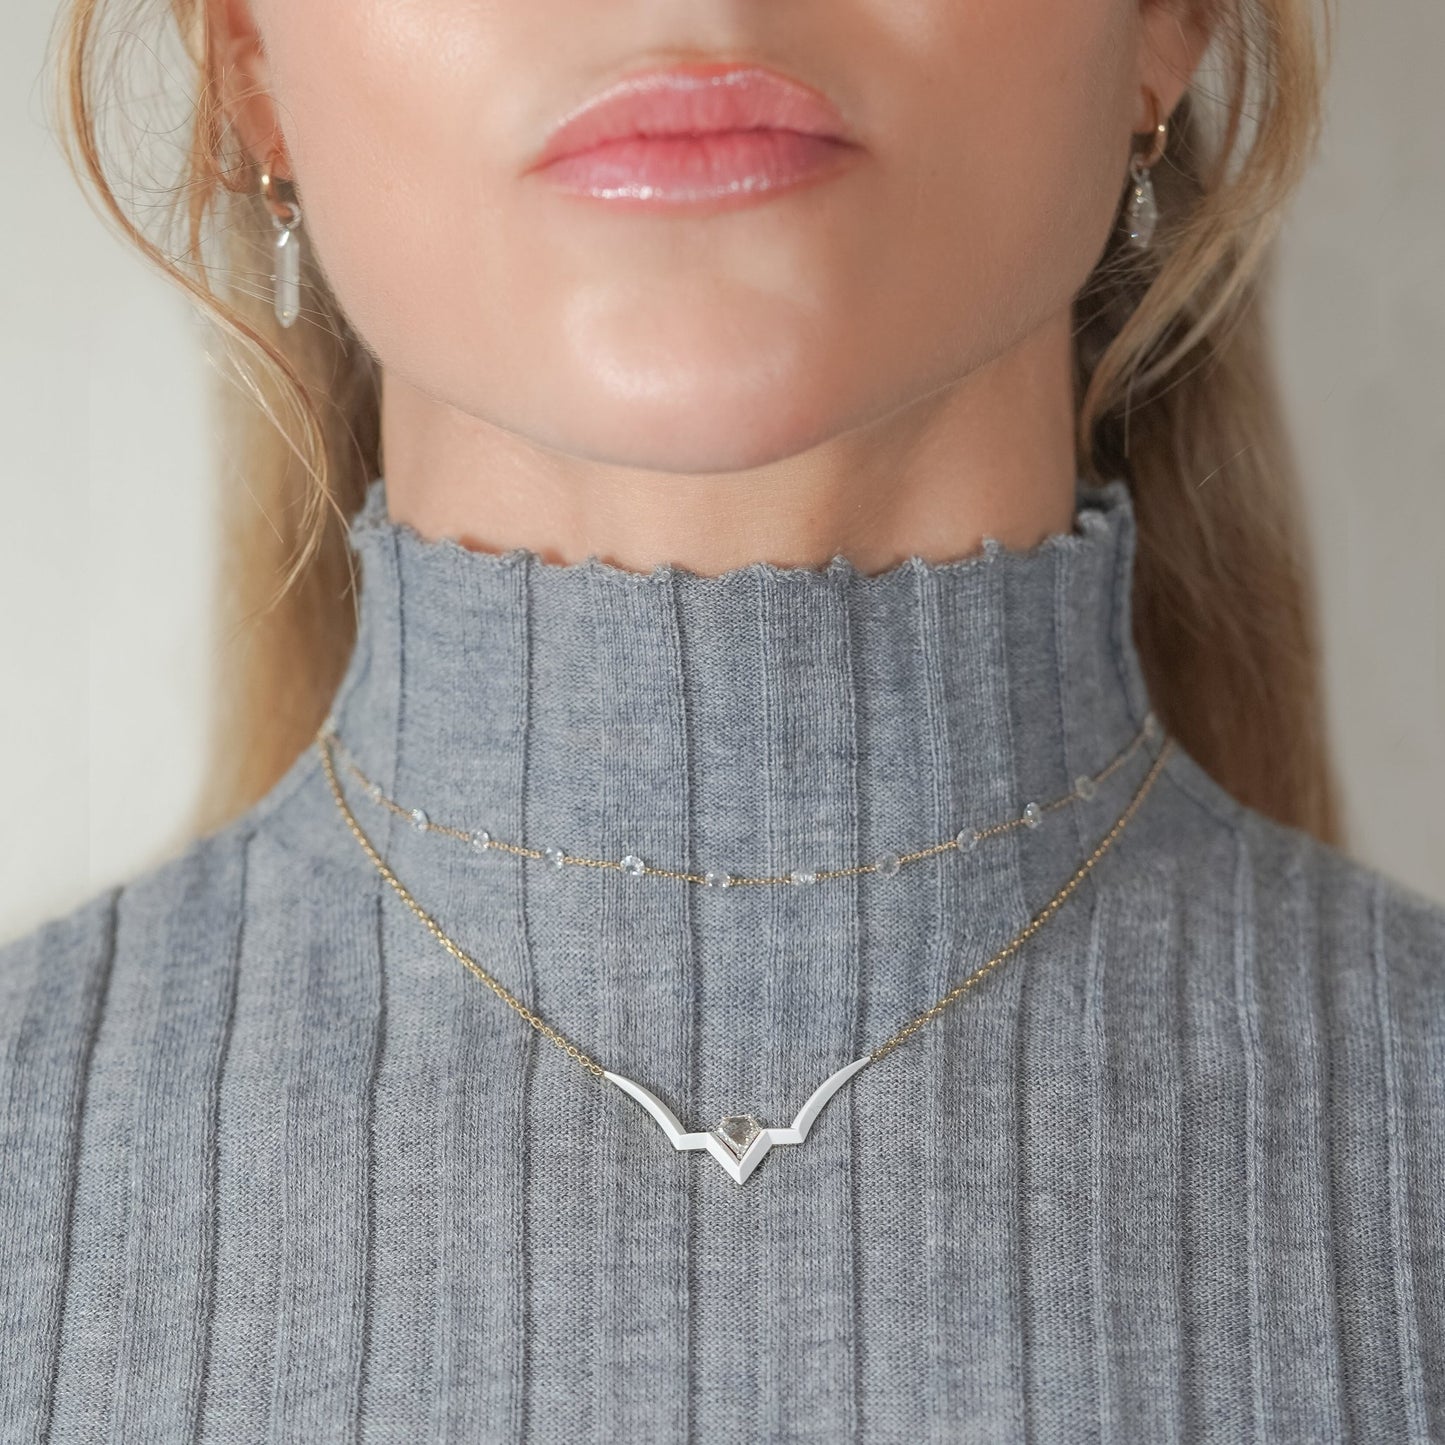 Taura necklace with shield portrait cut diamond - Ines Nieto London